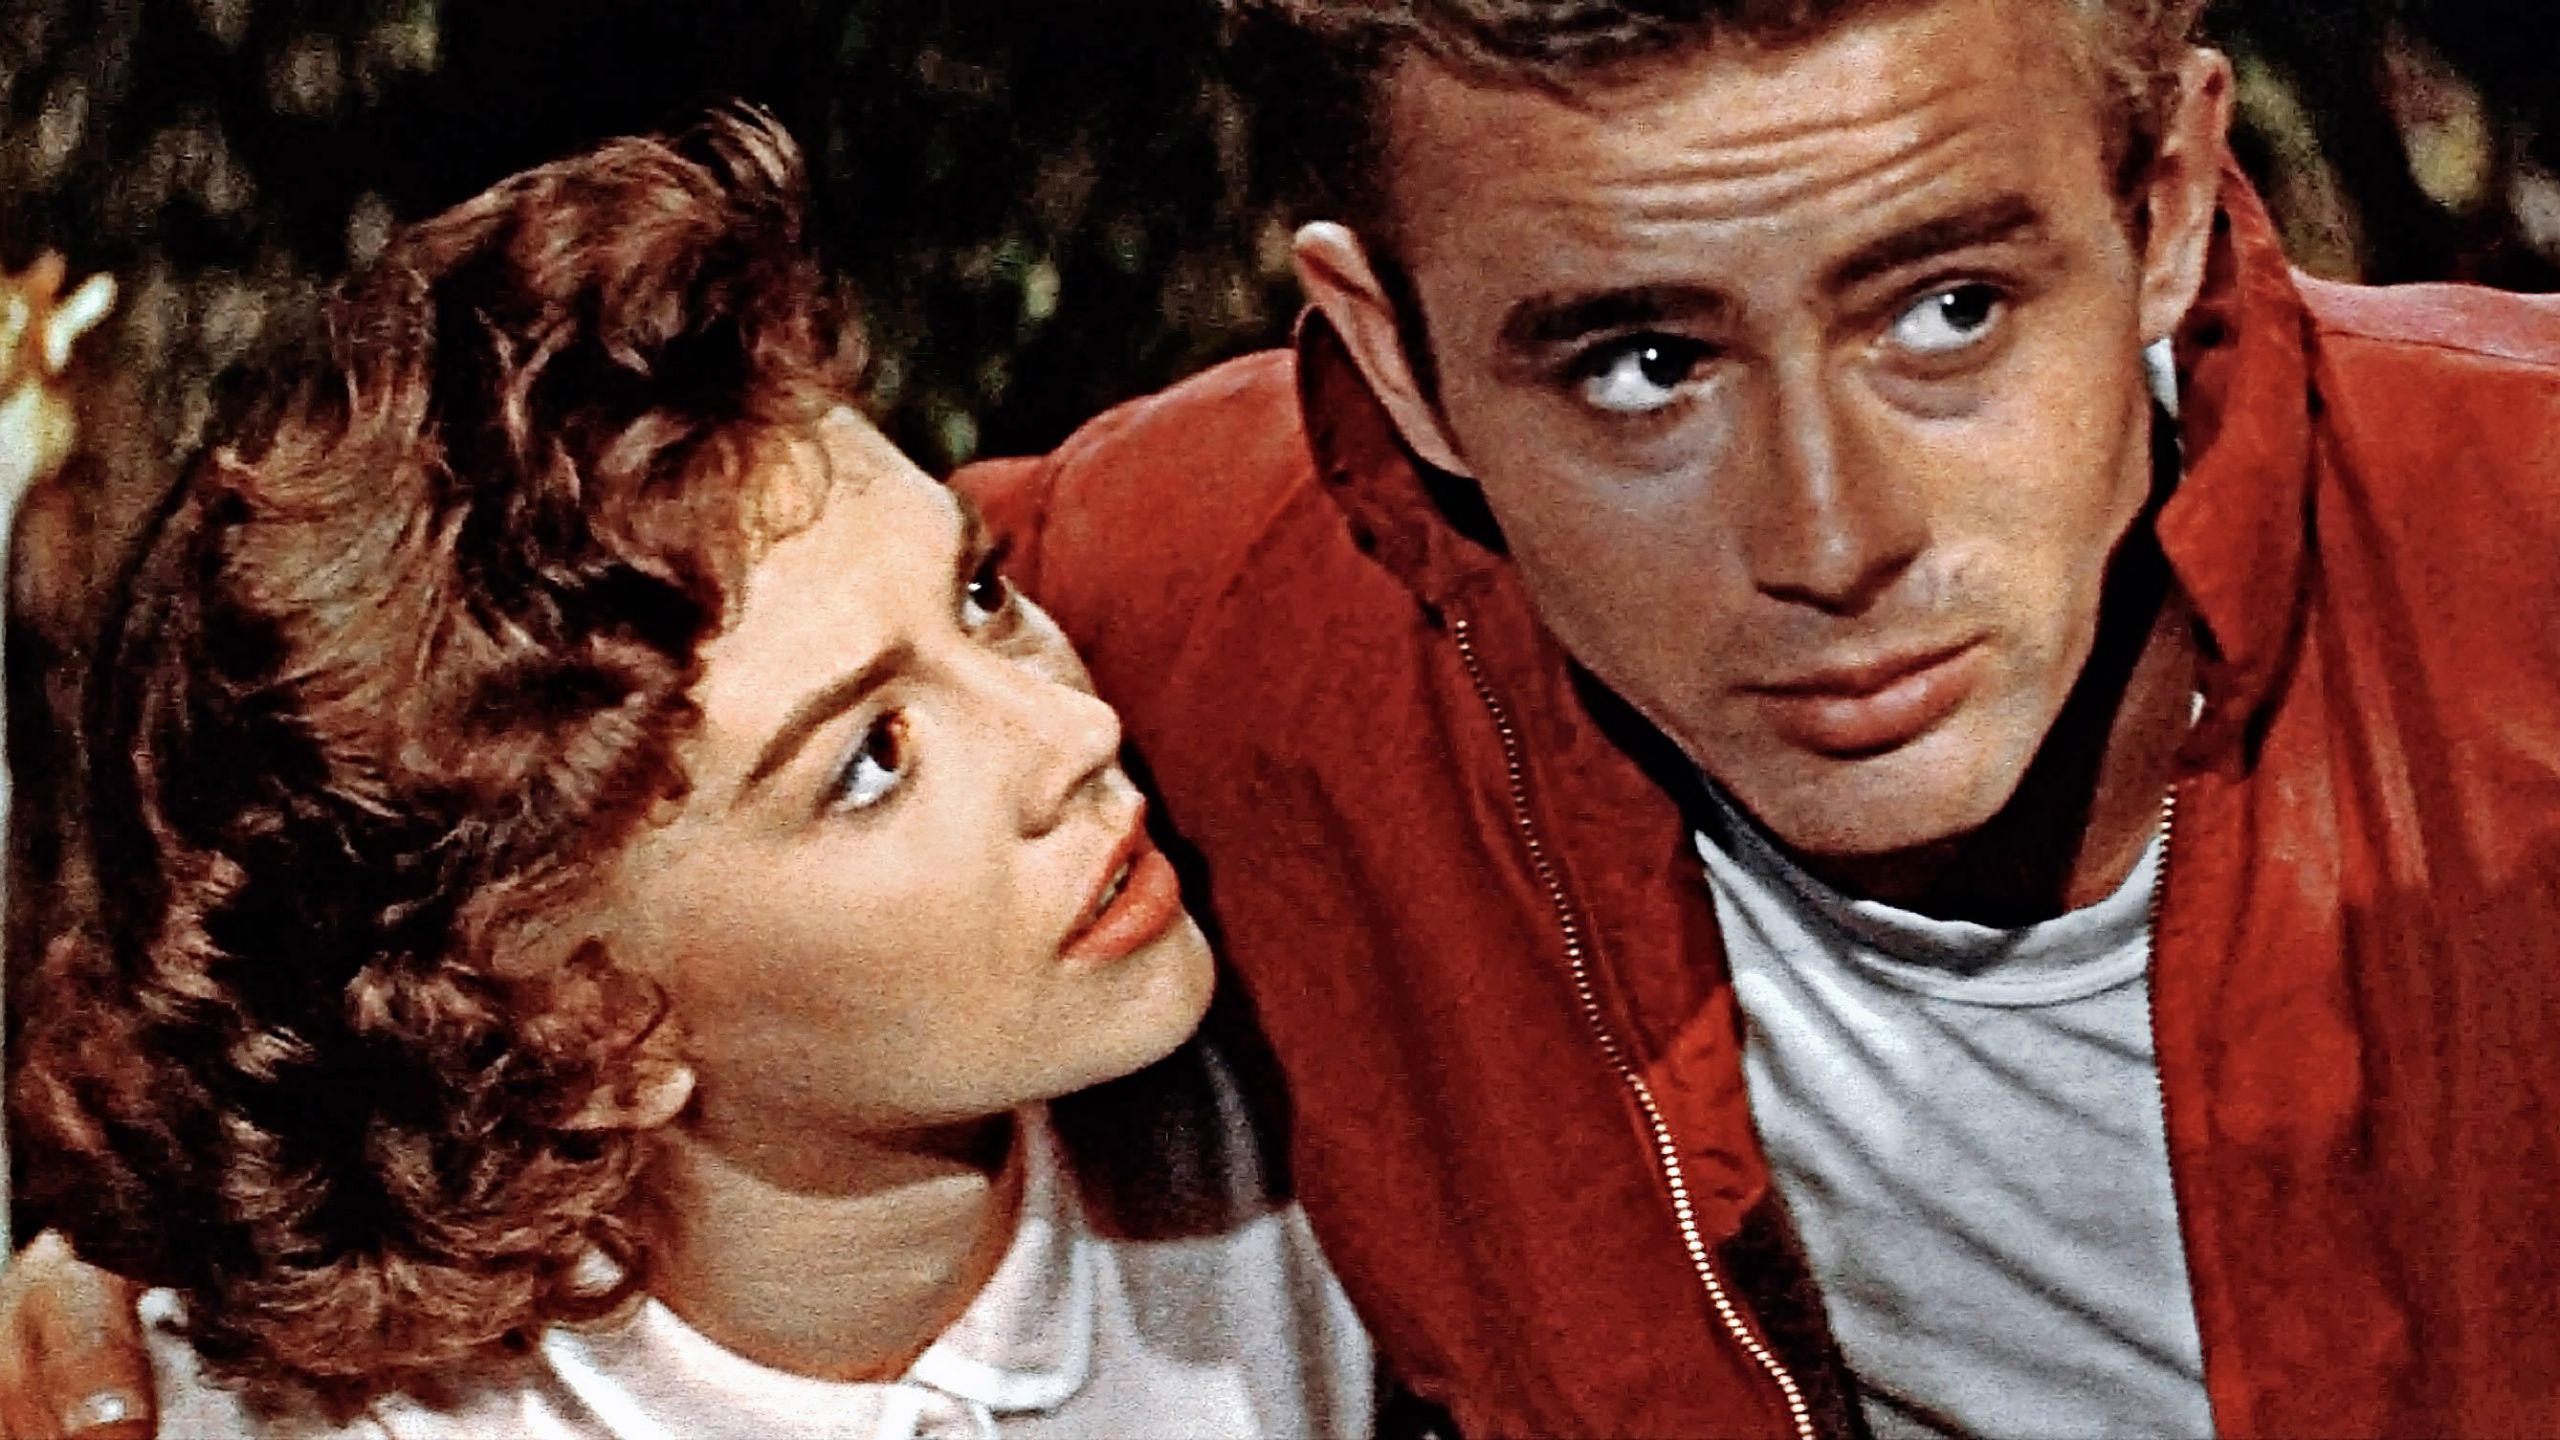 Junger Mann in roter Lederjacke legt den Arm um eine junge Frau, die ihn anblickt.